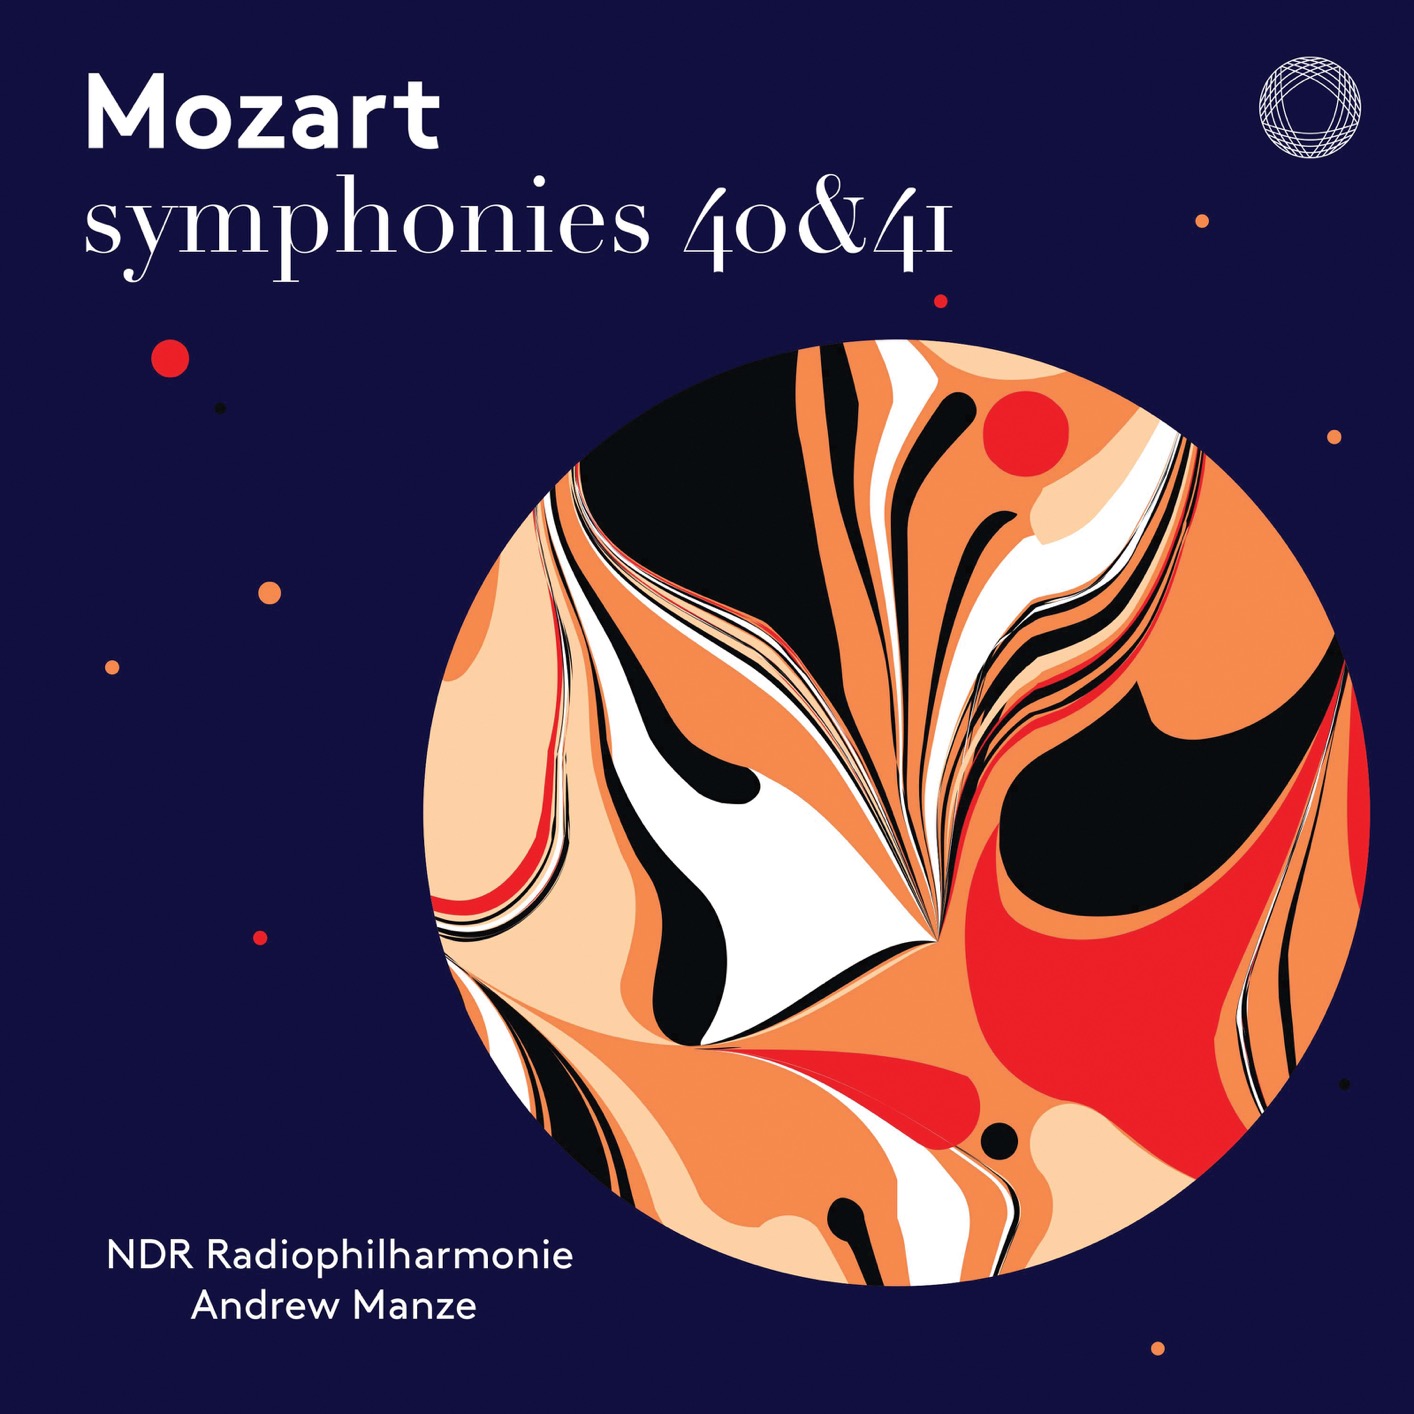 NDR Radiophilharmonie & Andrew Manze – Mozart: Symphonies Nos. 40 & 41 (Live) (2019) [FLAC 24bit/48kHz]